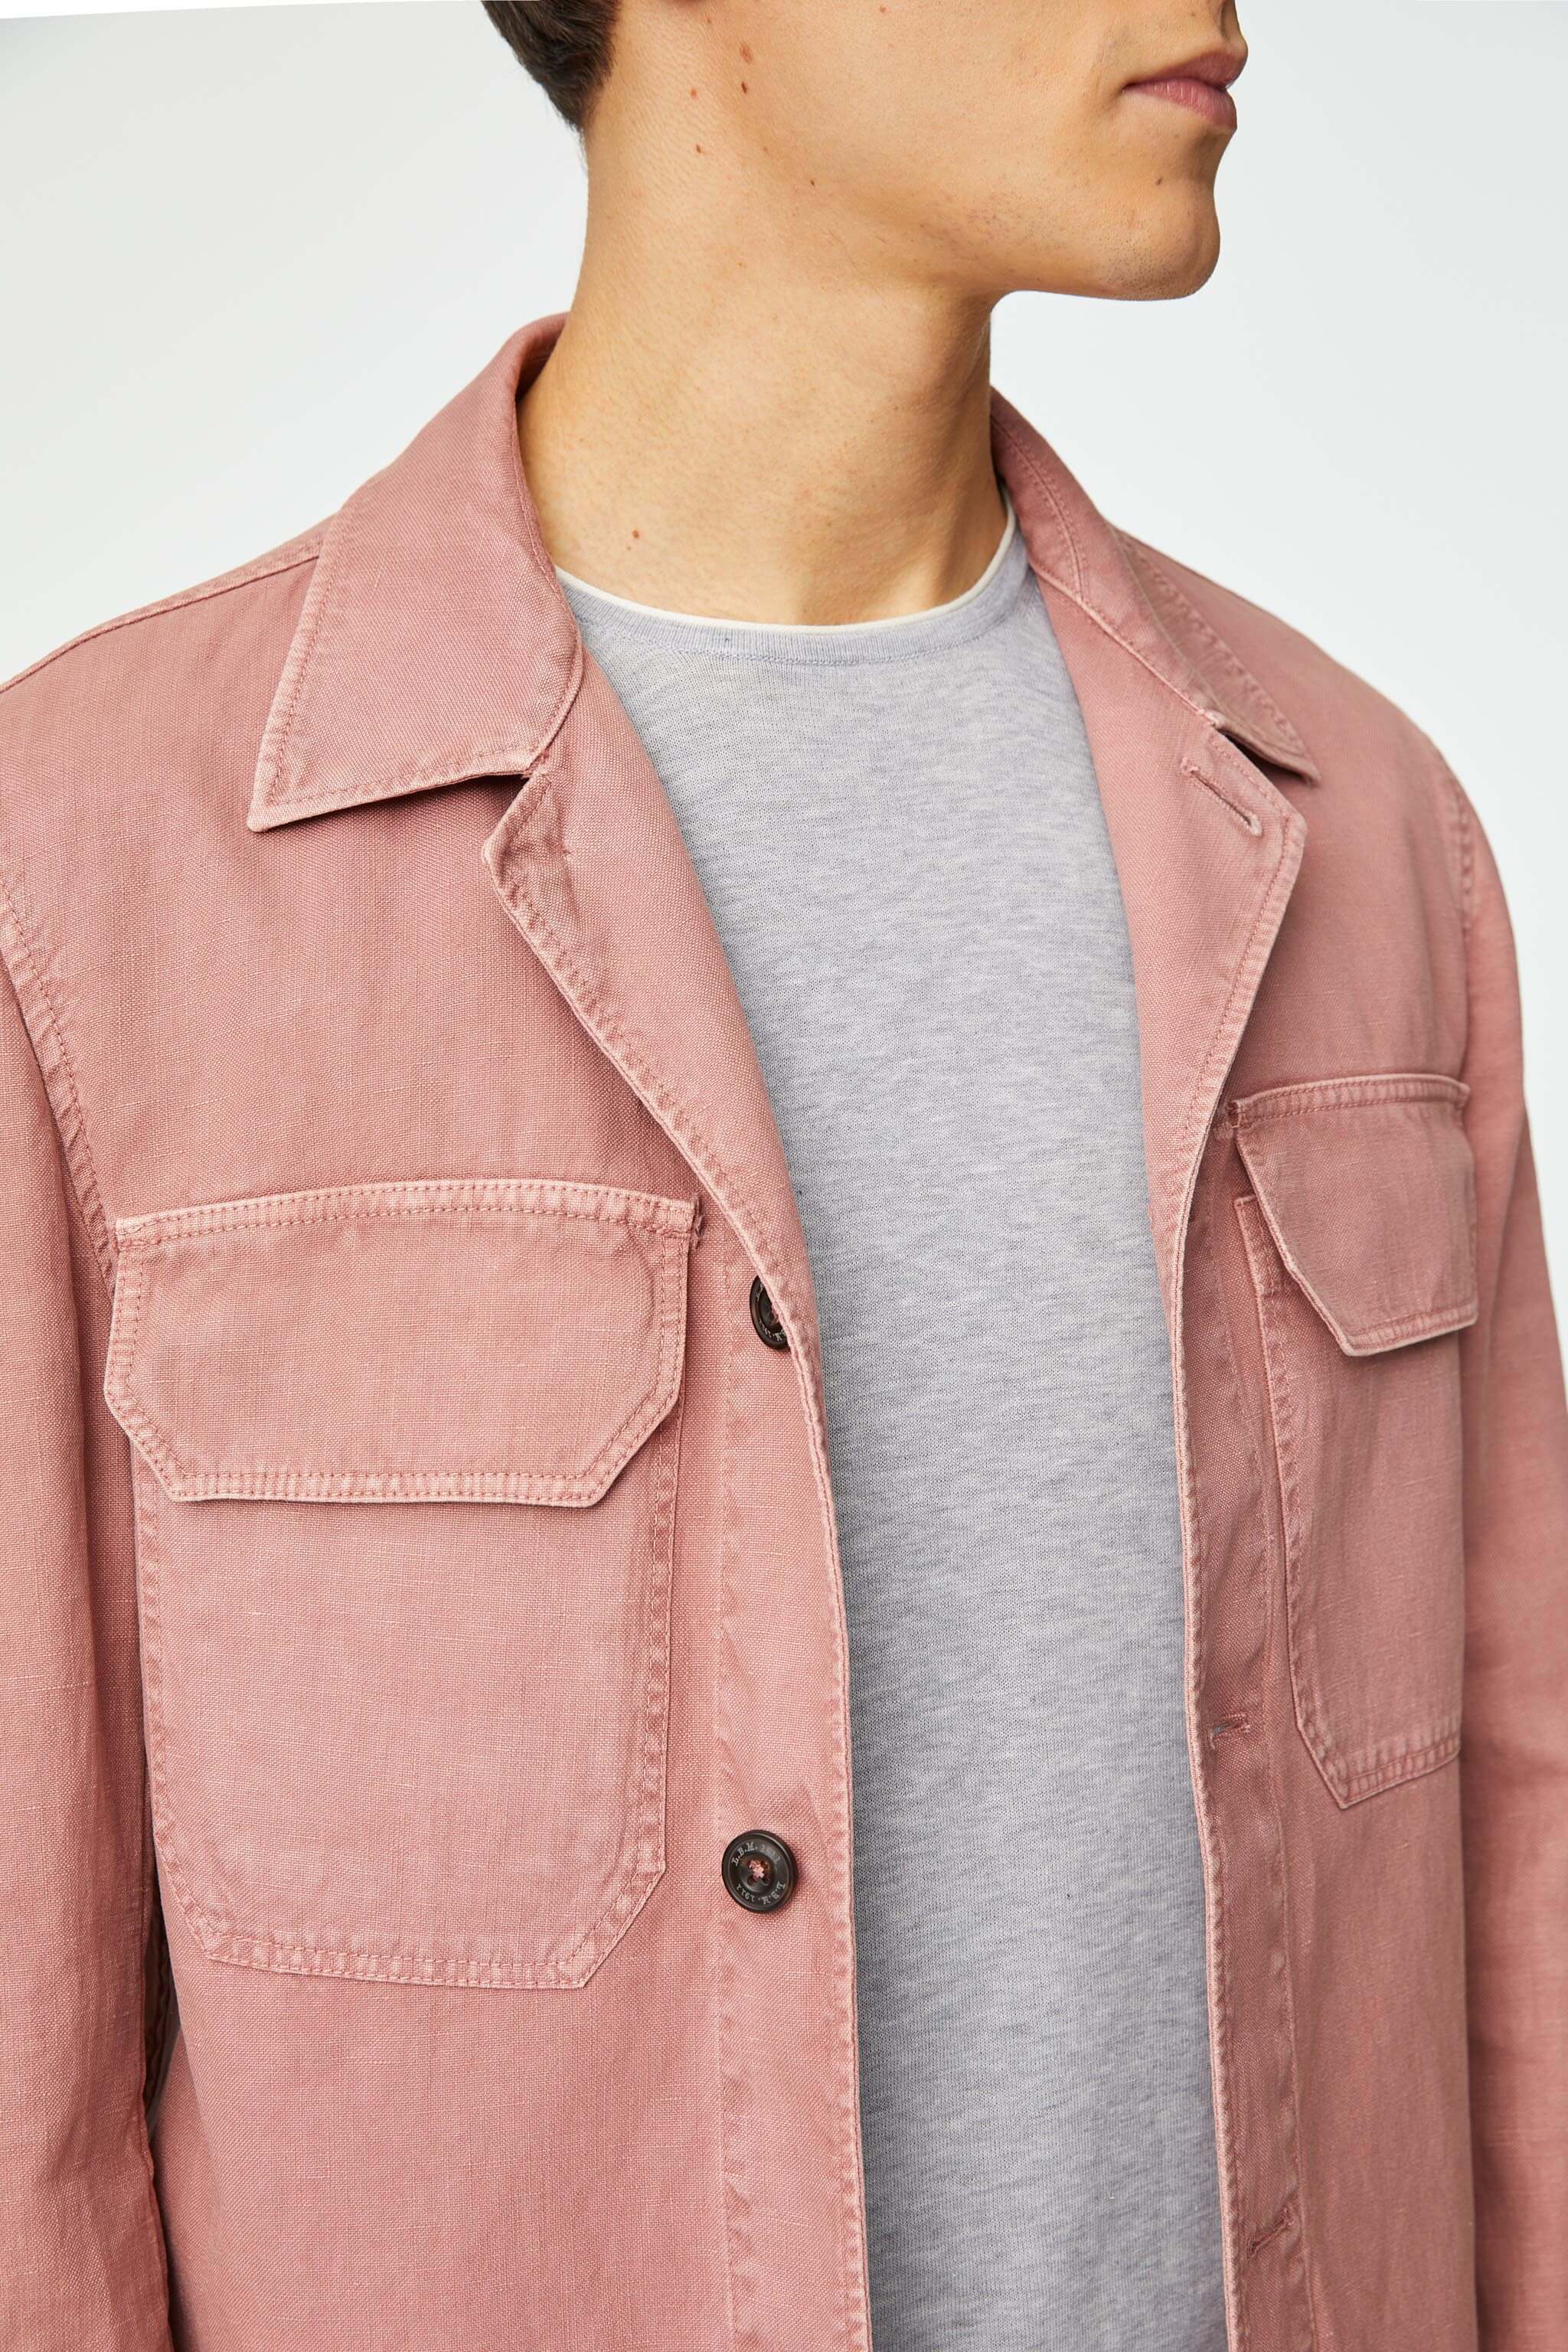 Garment-dyed pink overshirt